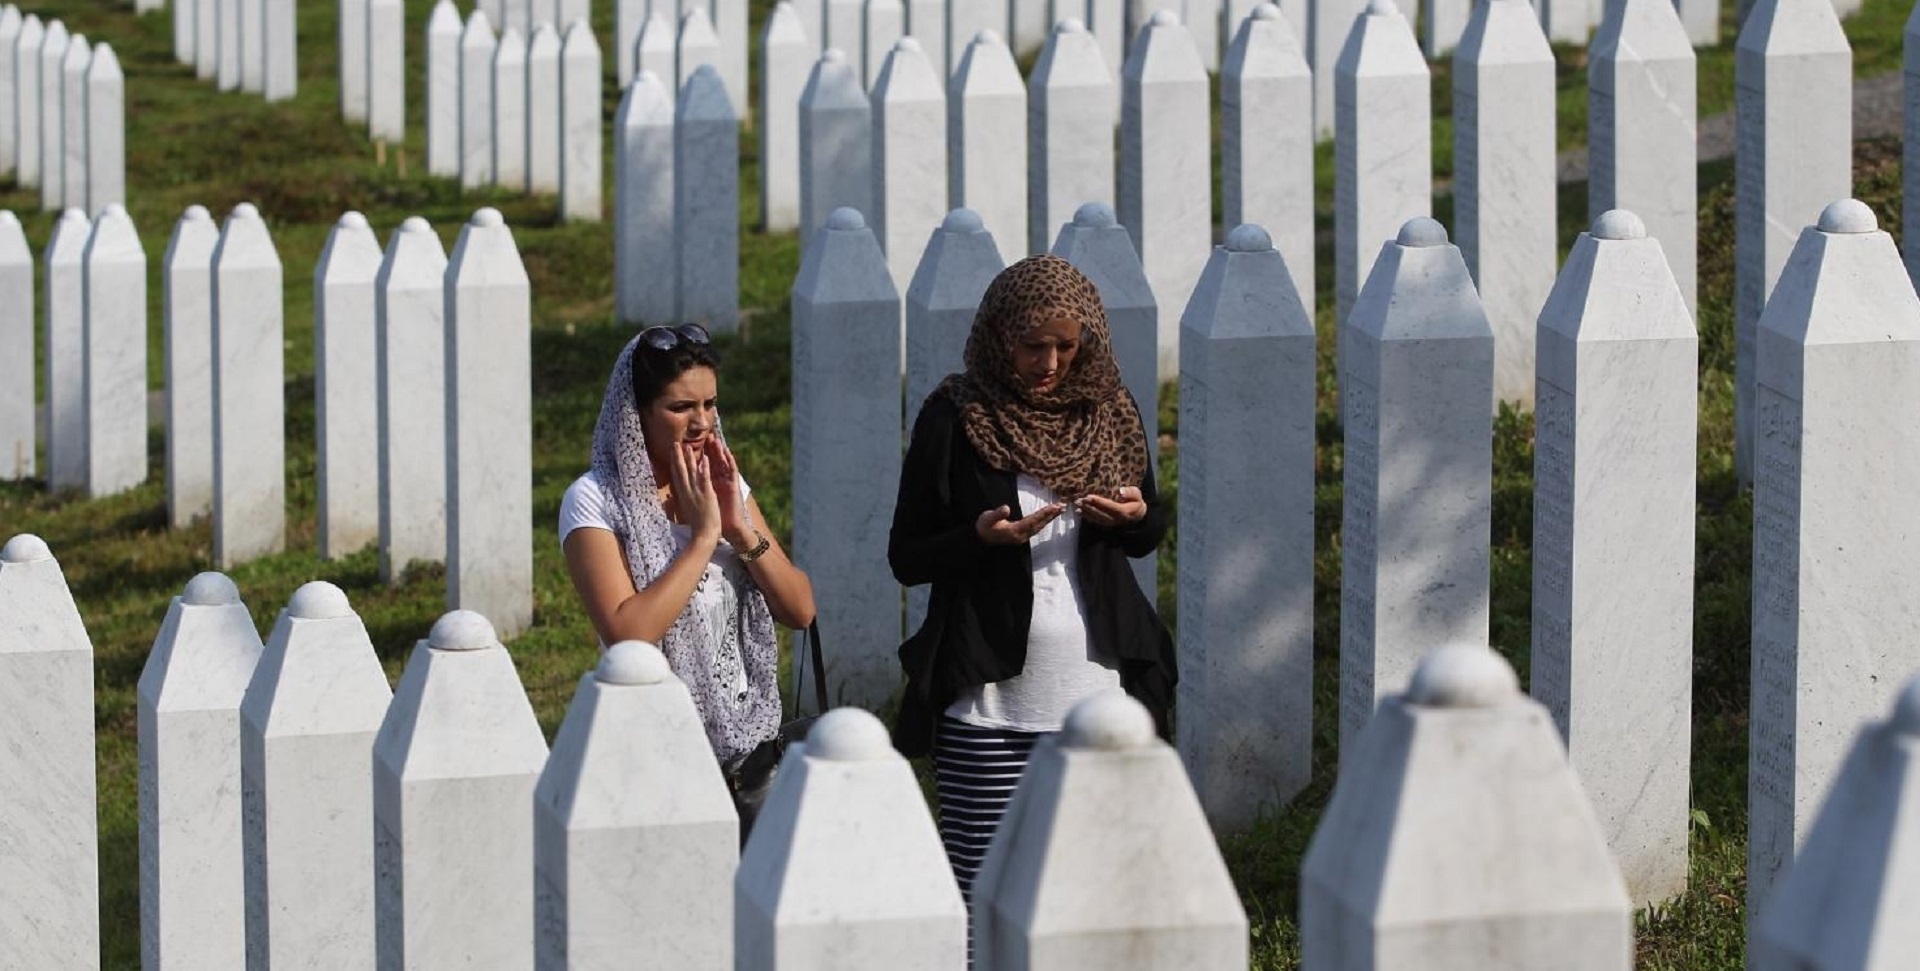 02.07.2015., Srebrenica, Bosna i Hercegovina - Zivot u Srebrenici 20 godina nakon genocida. 
Merisa Ibrahimovic i Enisa Belugic u memorijalnom centru Potocari.
Photo: Boris Scitar/Vecernji list/PIXSELL